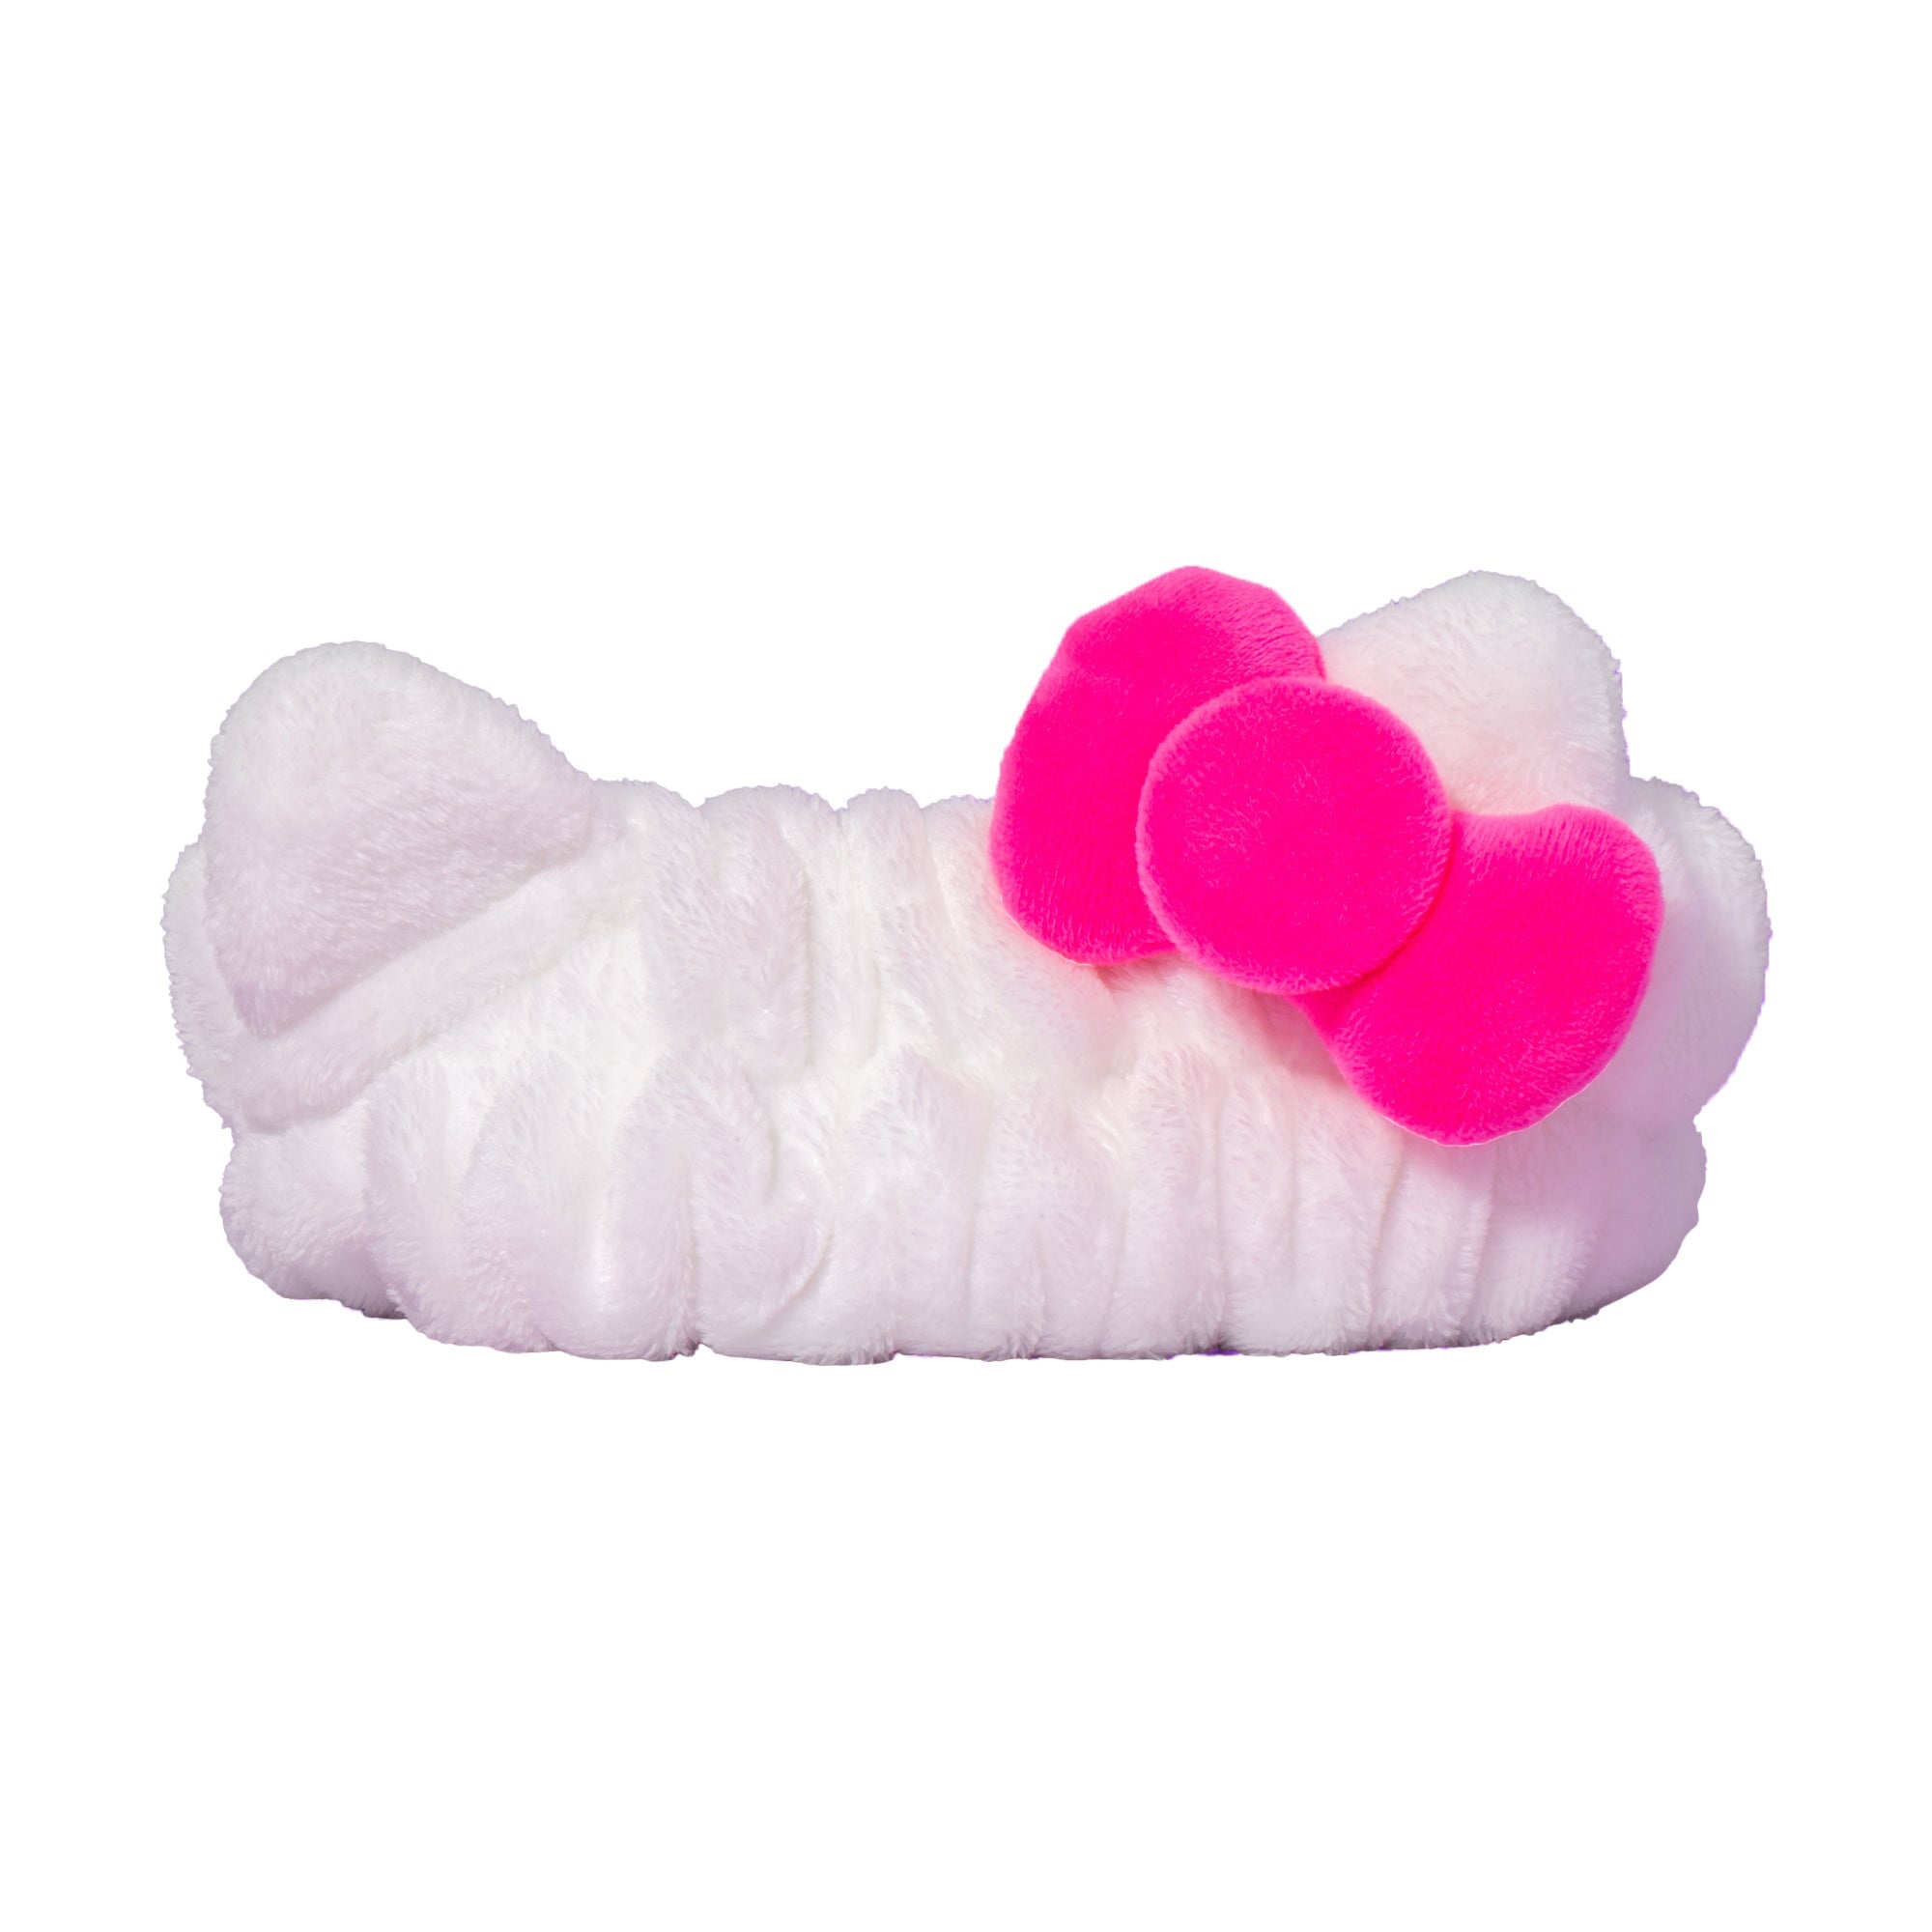 The Crème Shop x Hello Kitty(Purple) Plush Headyband™ w/Signature Bow - Perfect Pink Headbands The Crème Shop x Sanrio 